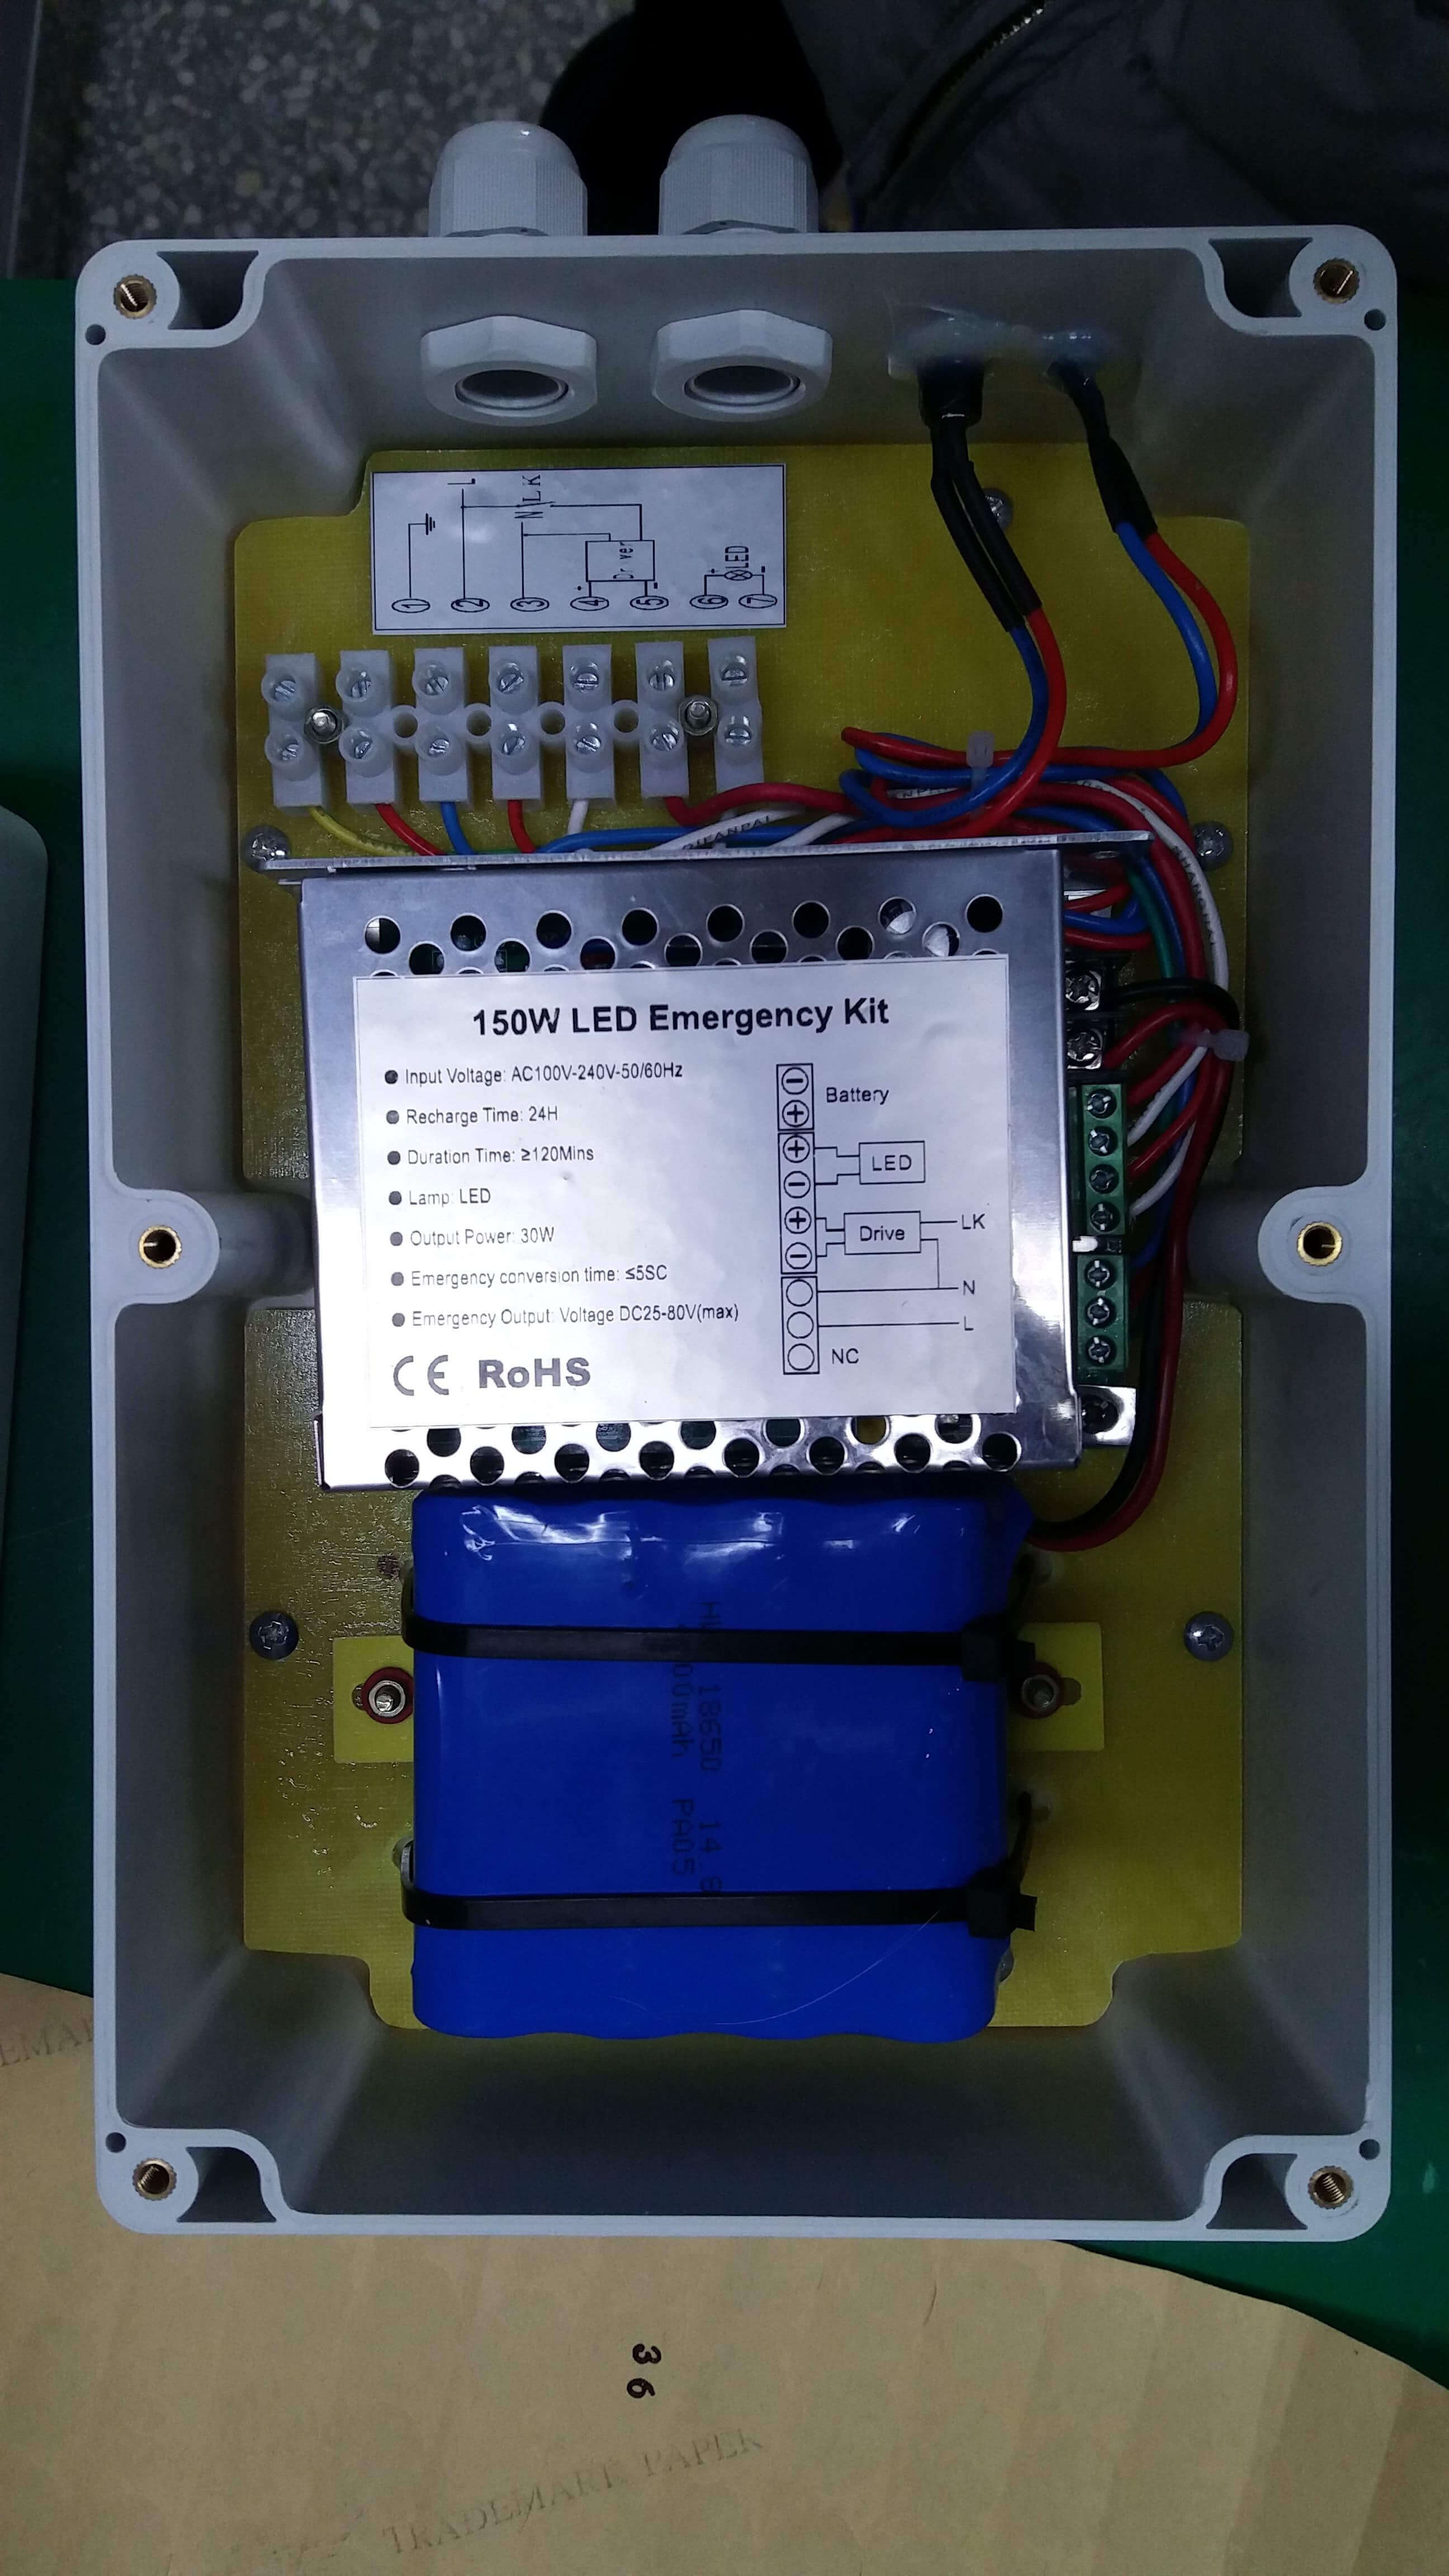 200W Highbay LED Light emergency conversion kit